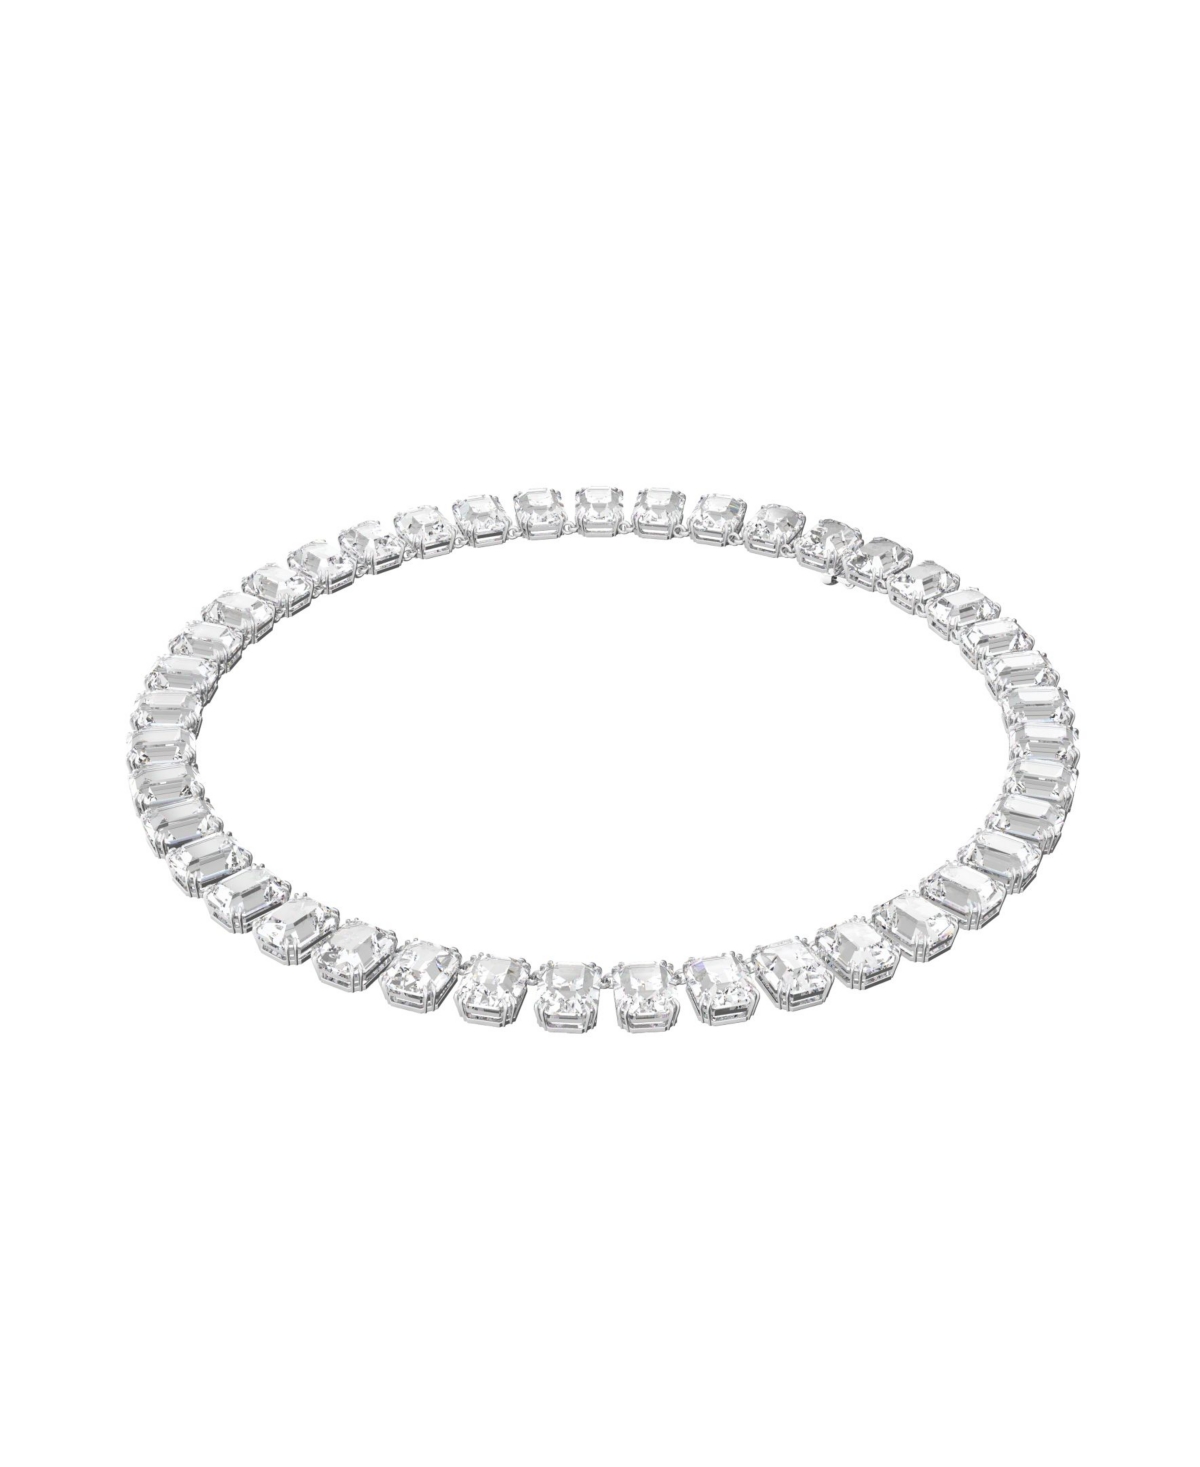 Swarovski Millenia Necklace with Octagon Cut Crystals